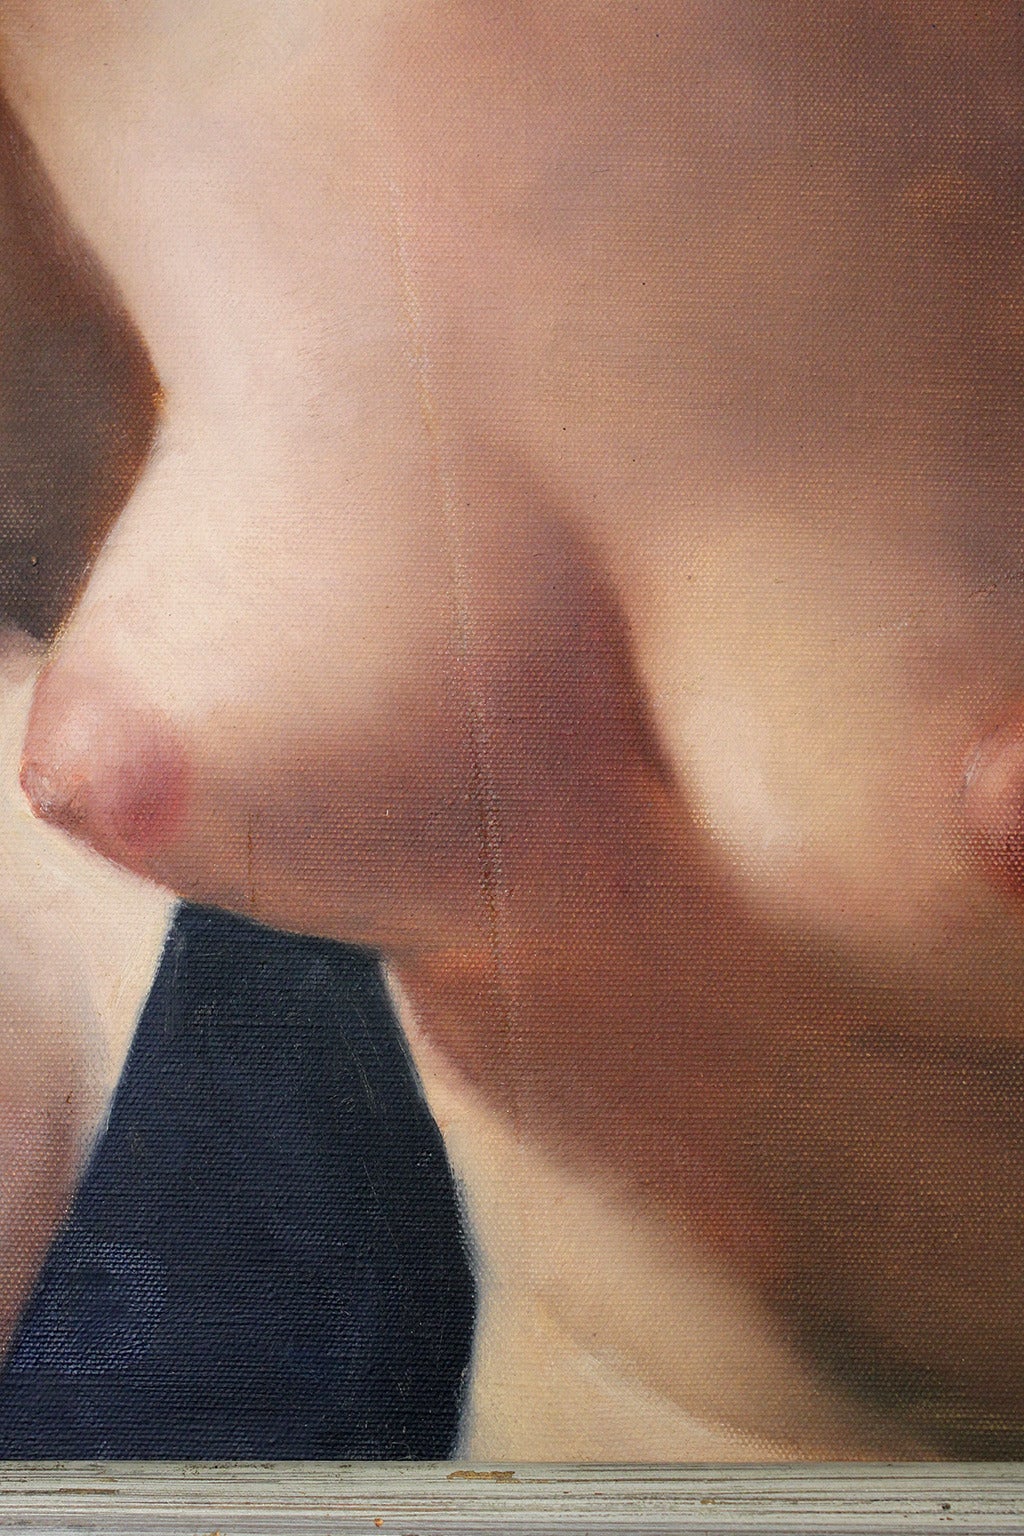 Pal Fried Nude Portrait Oil on Canvas For Sale 2